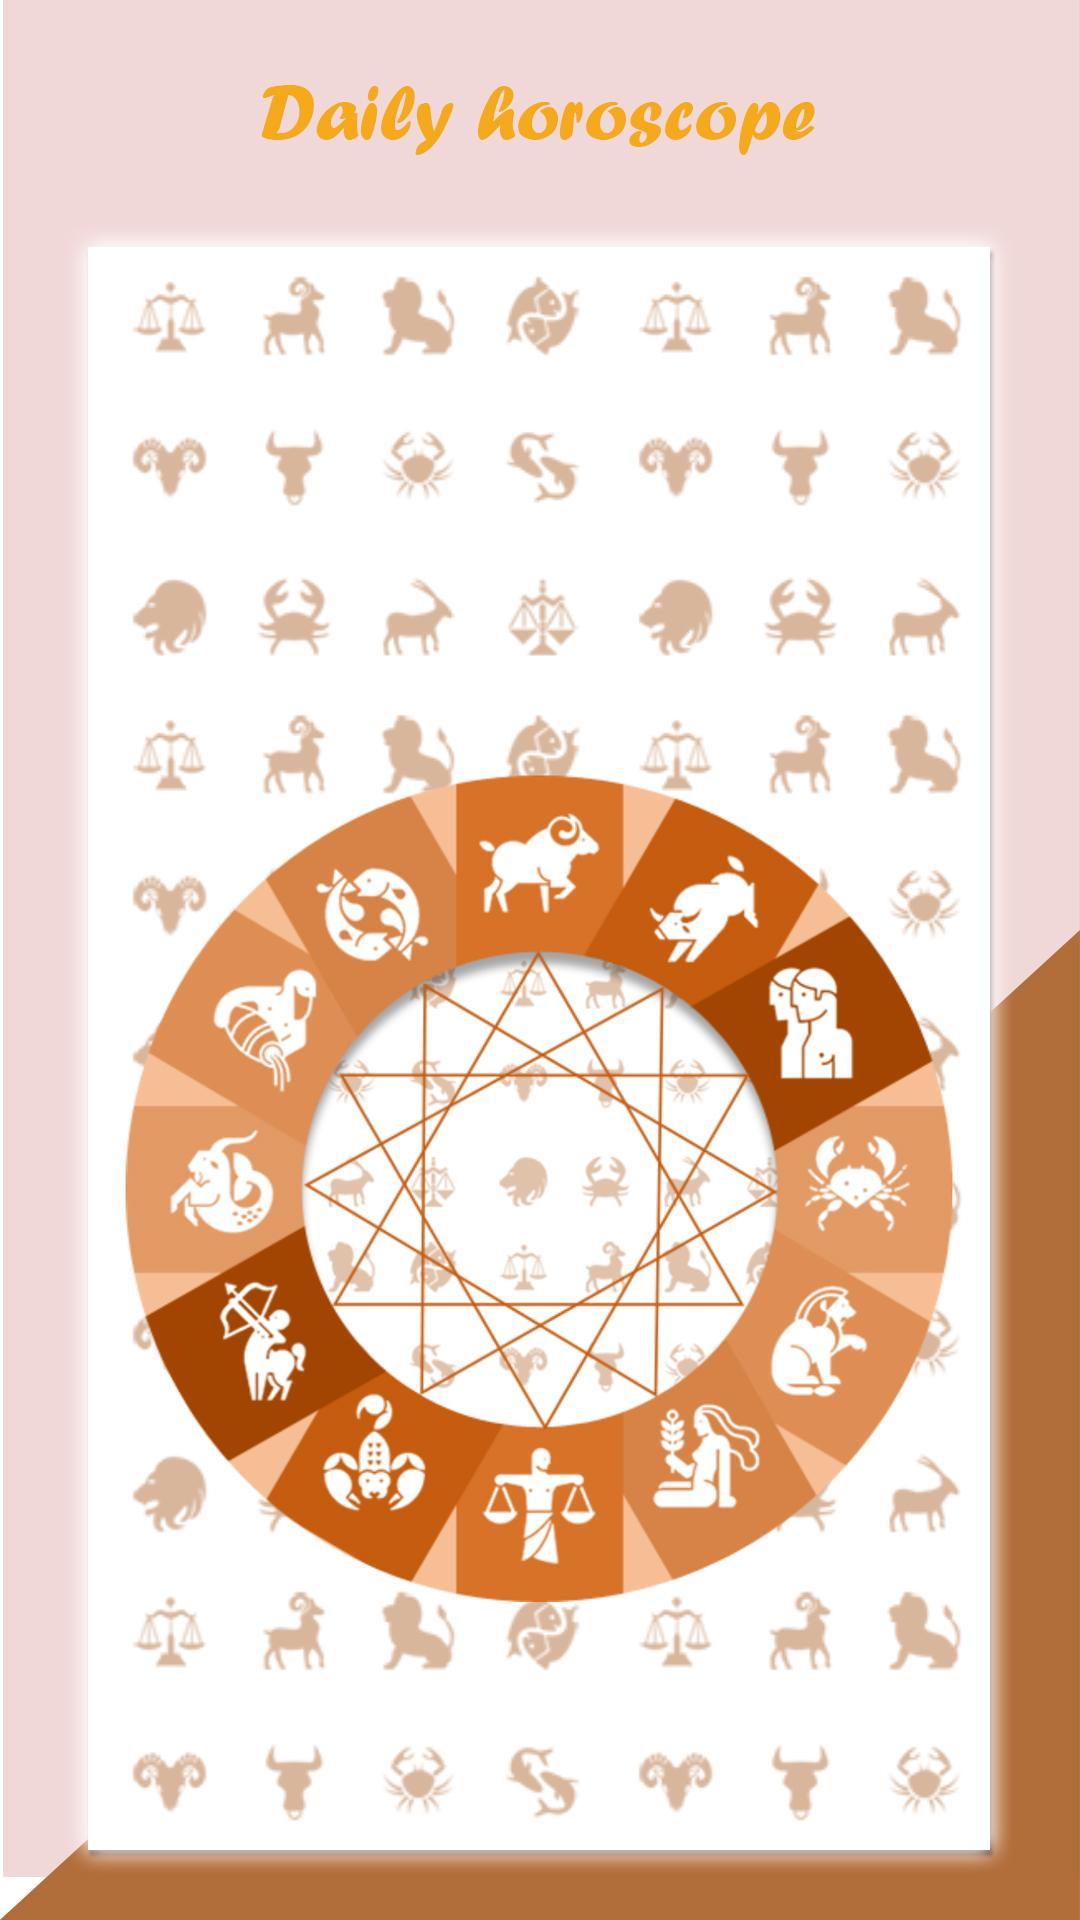 Daily Horoscope. Дейли гороскопы